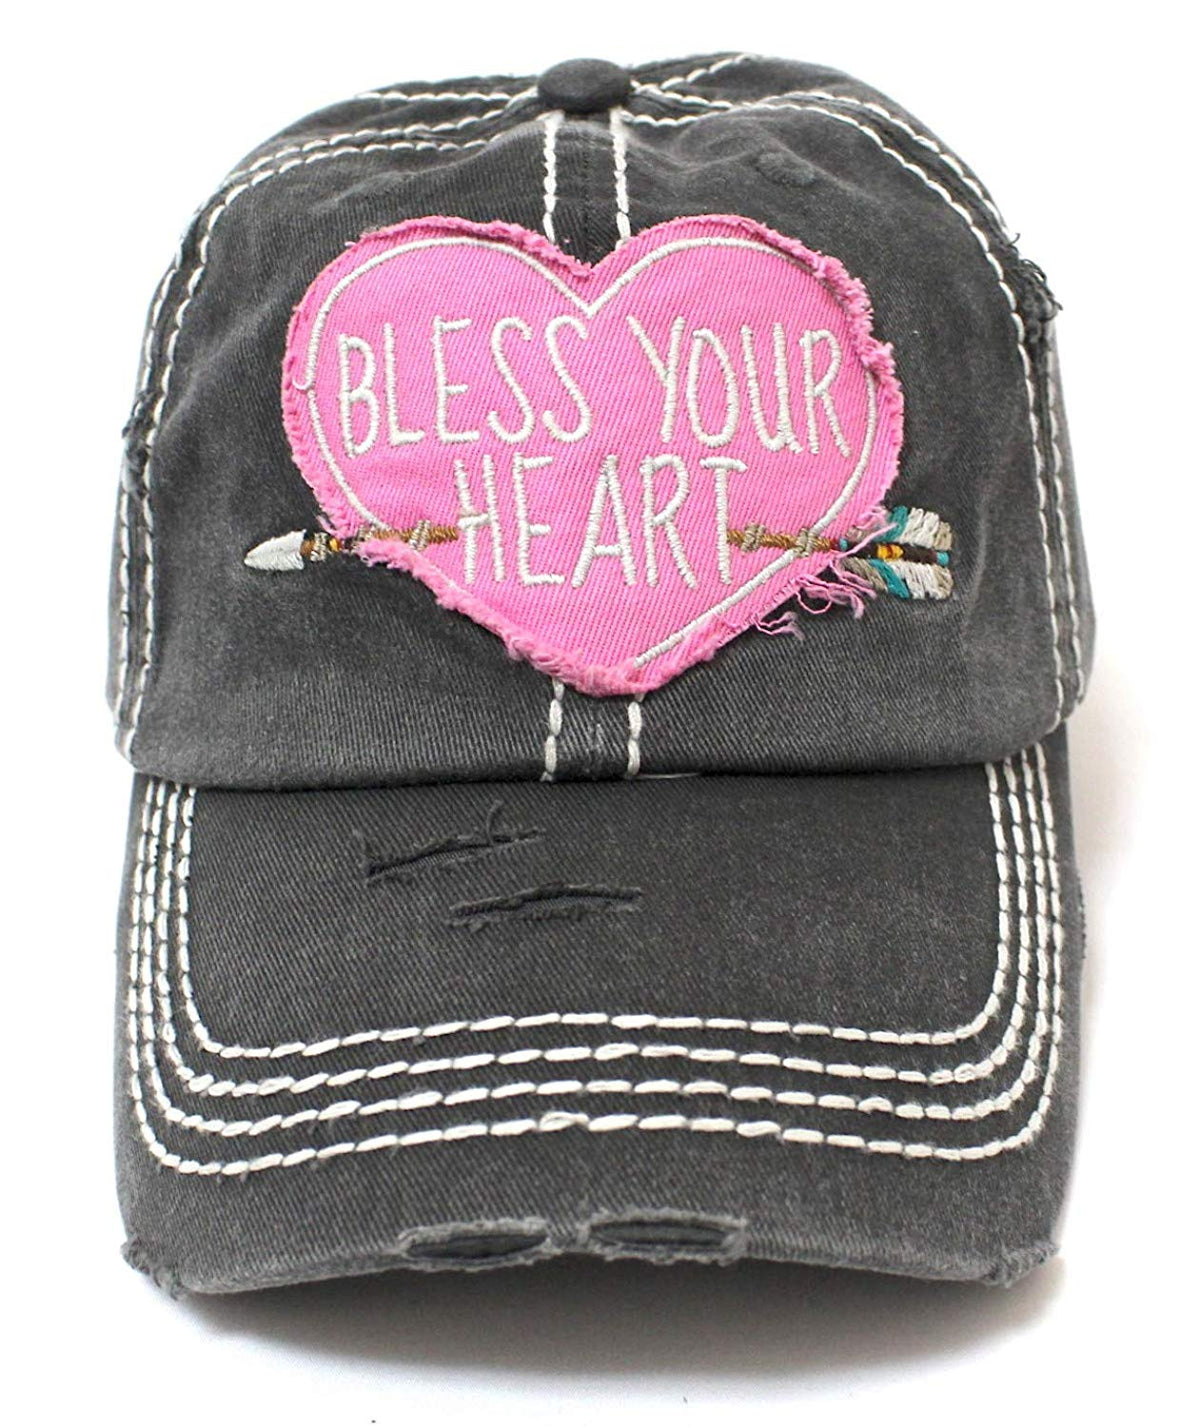 New!! Black Heart & Arrow Bless Your Heart Vintage Hat - Caps 'N Vintage 